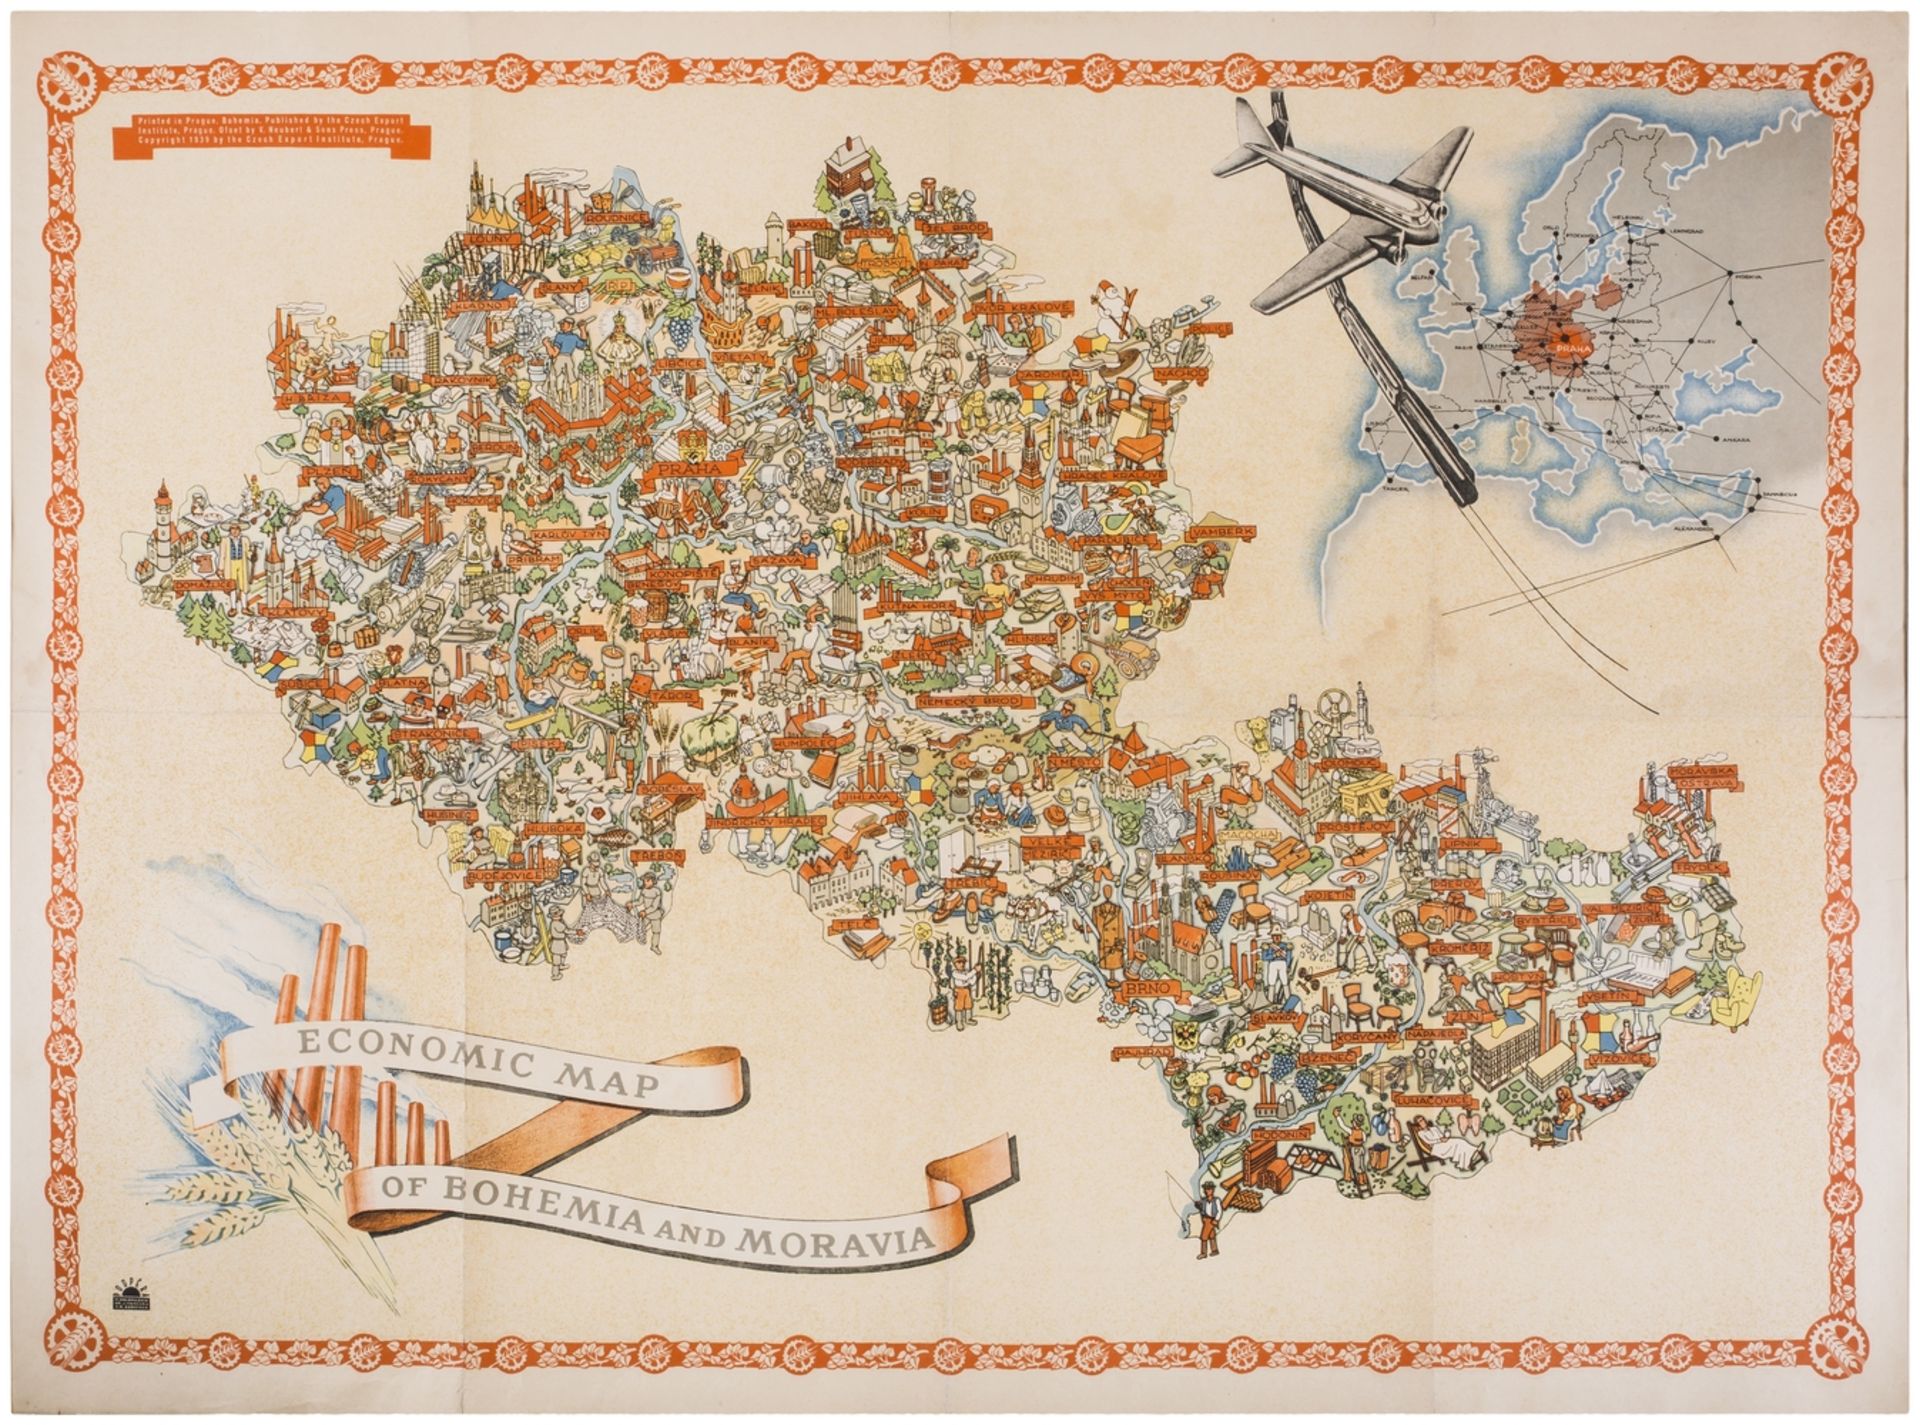 [Soviet art. Map of Czechoslovakia]. Economic map of Bohemia and Moravia. - Prague, 1939. 63x84 cm. 